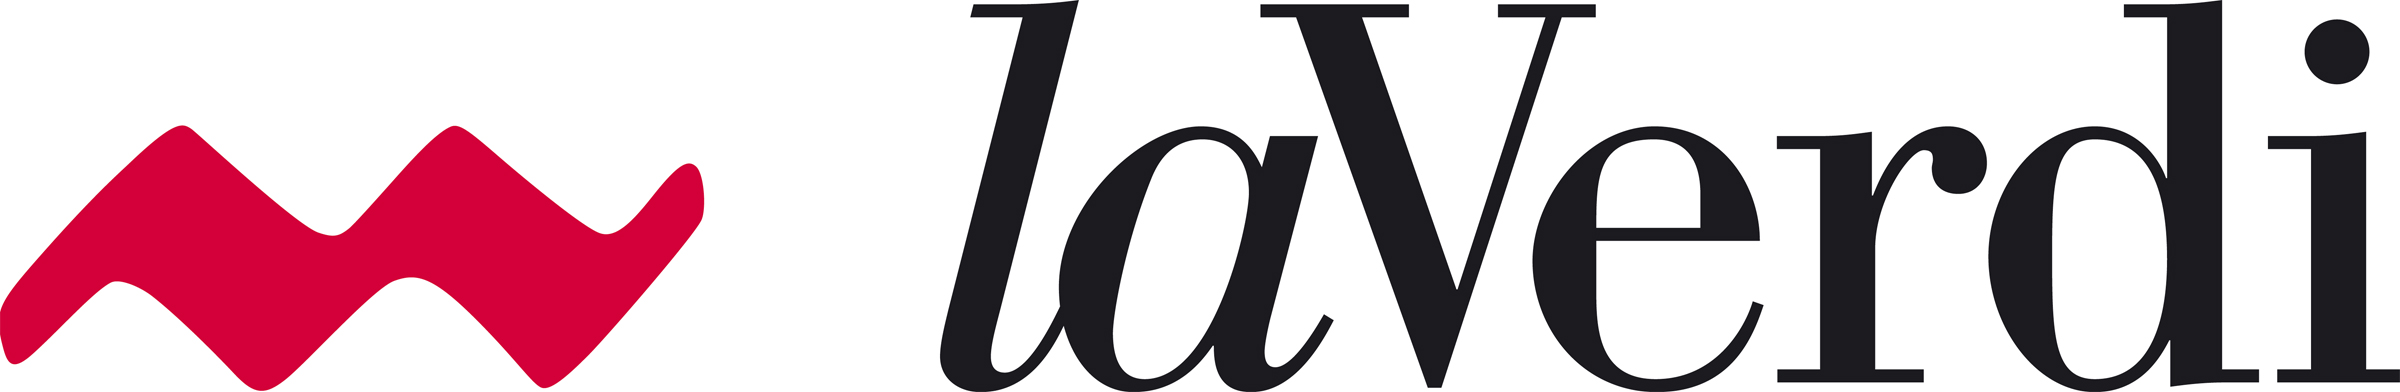 logo-verdi-web.jpg